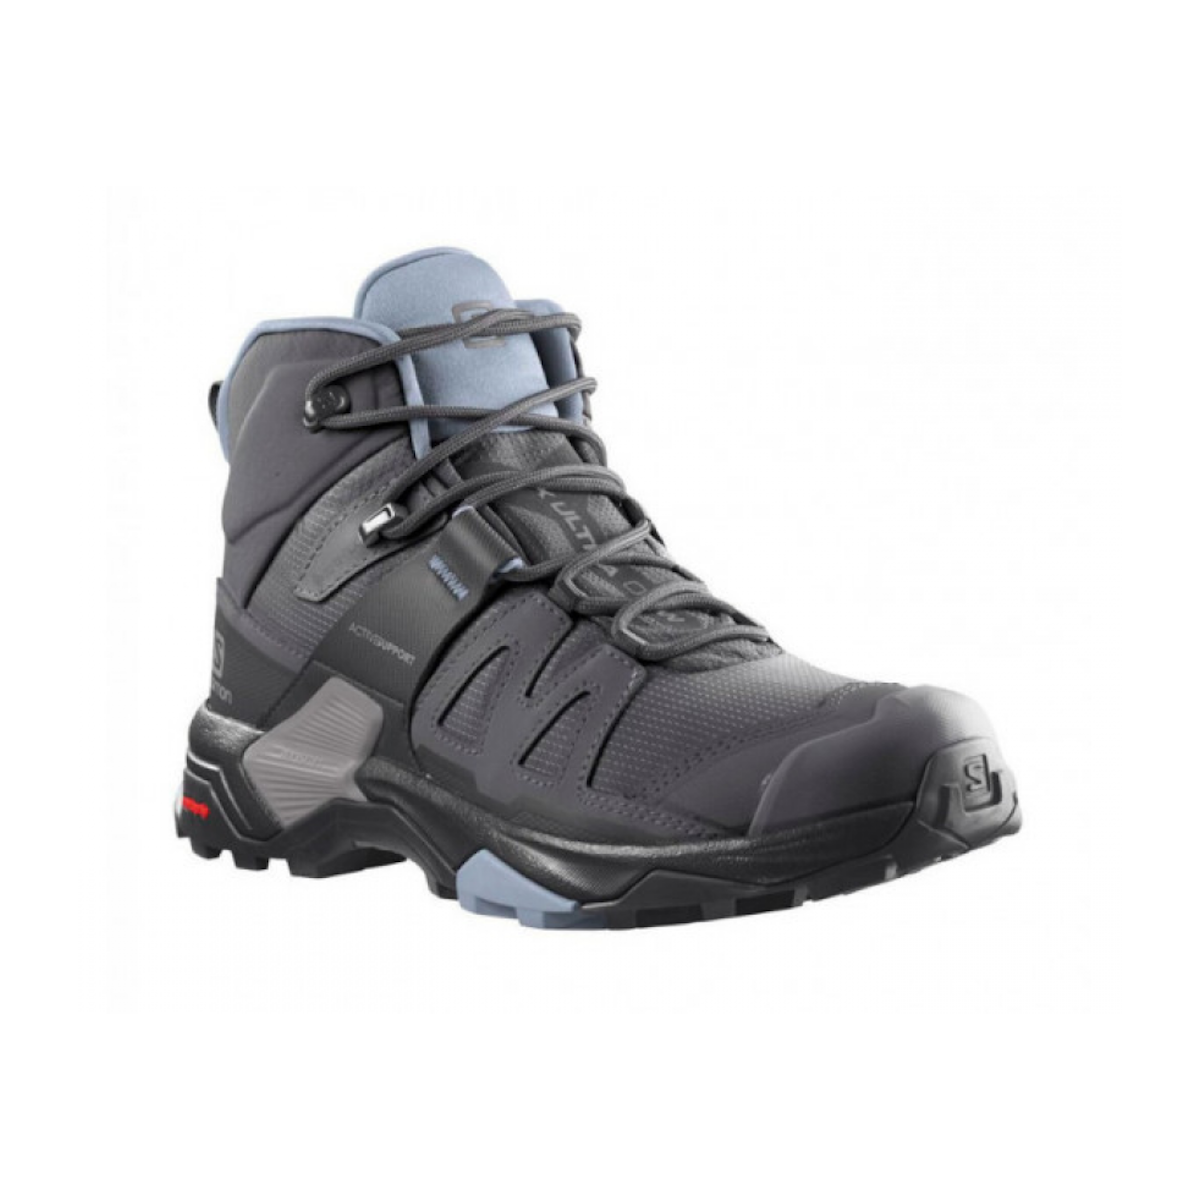 SALOMON X ULTRA 4 MID GTX W hiking footwear - grey/black